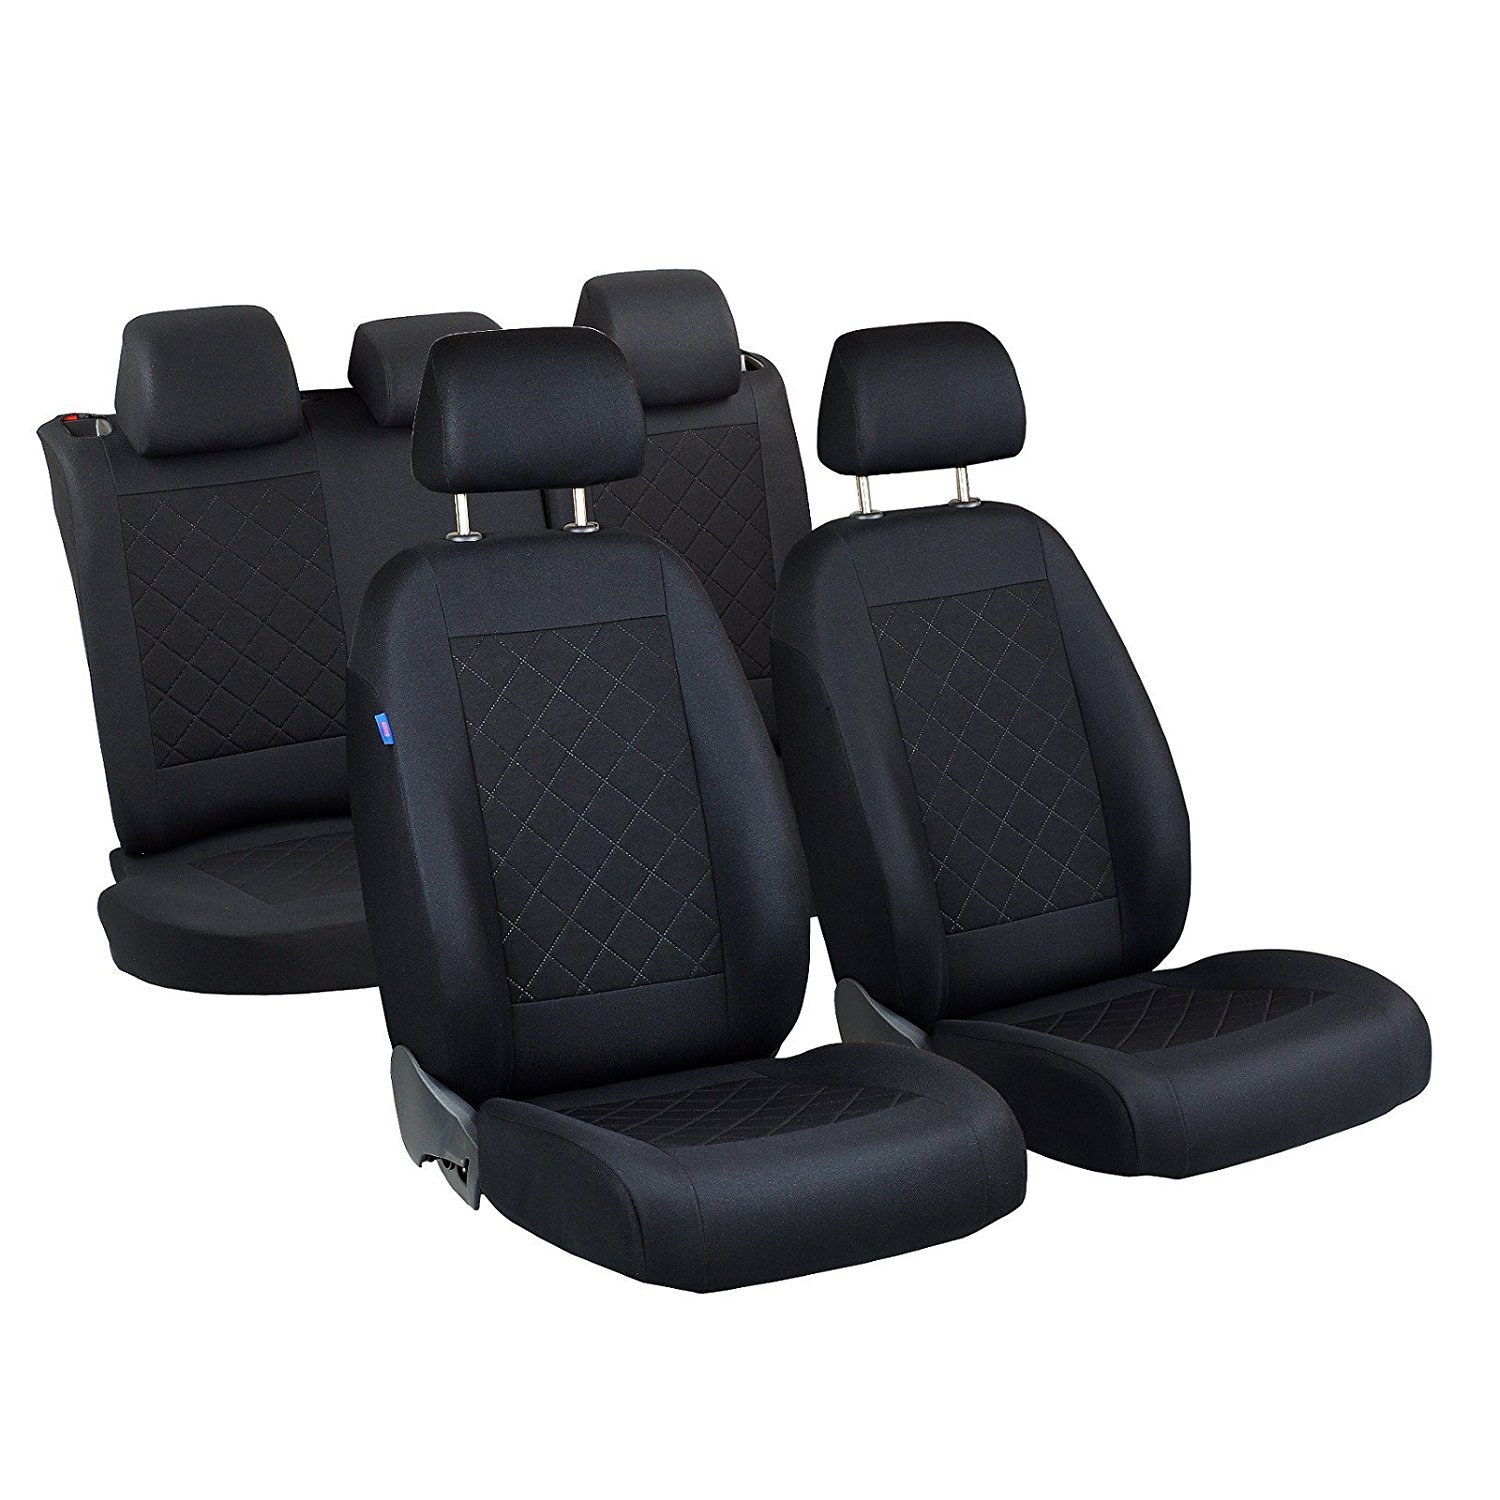 A3 Sitzbezüge - 1 Set - Farbe Premium Schwarz gepresstes Karomuster